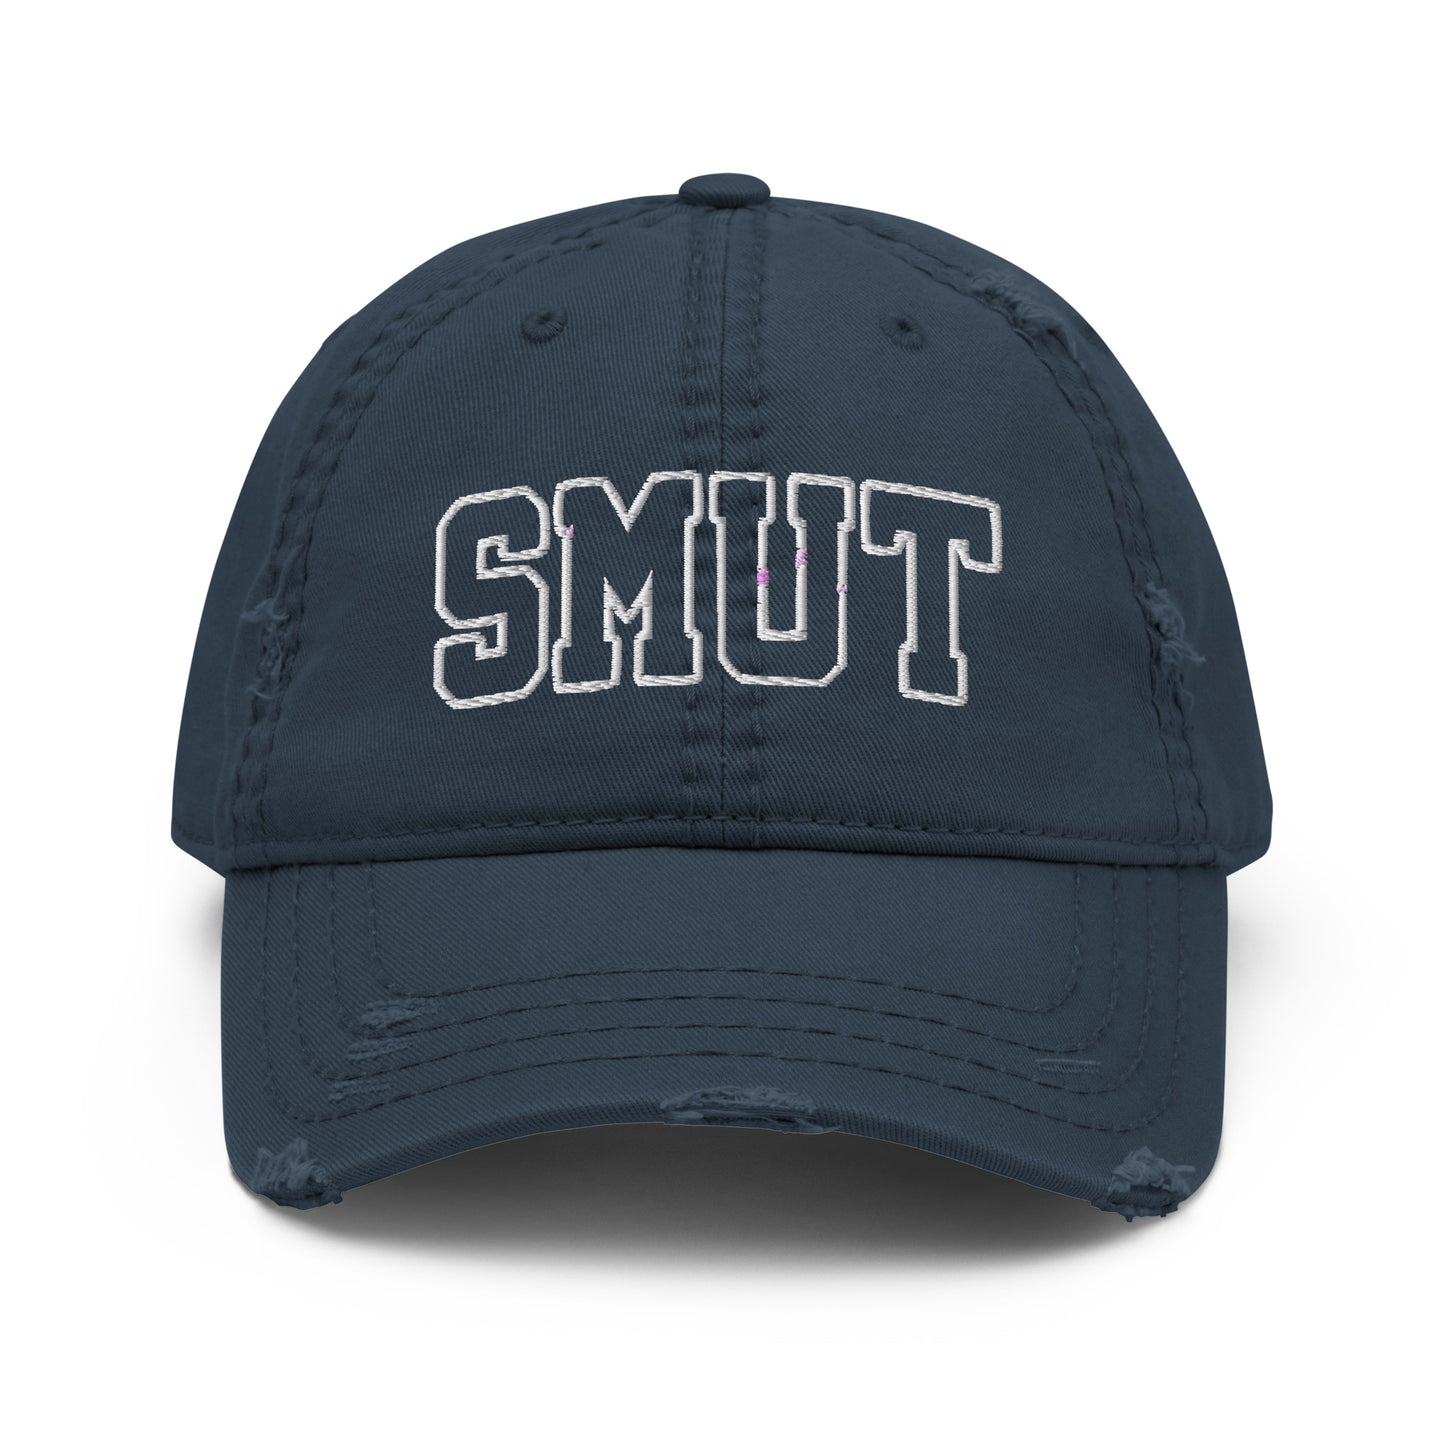 SMUT distressed dad hat